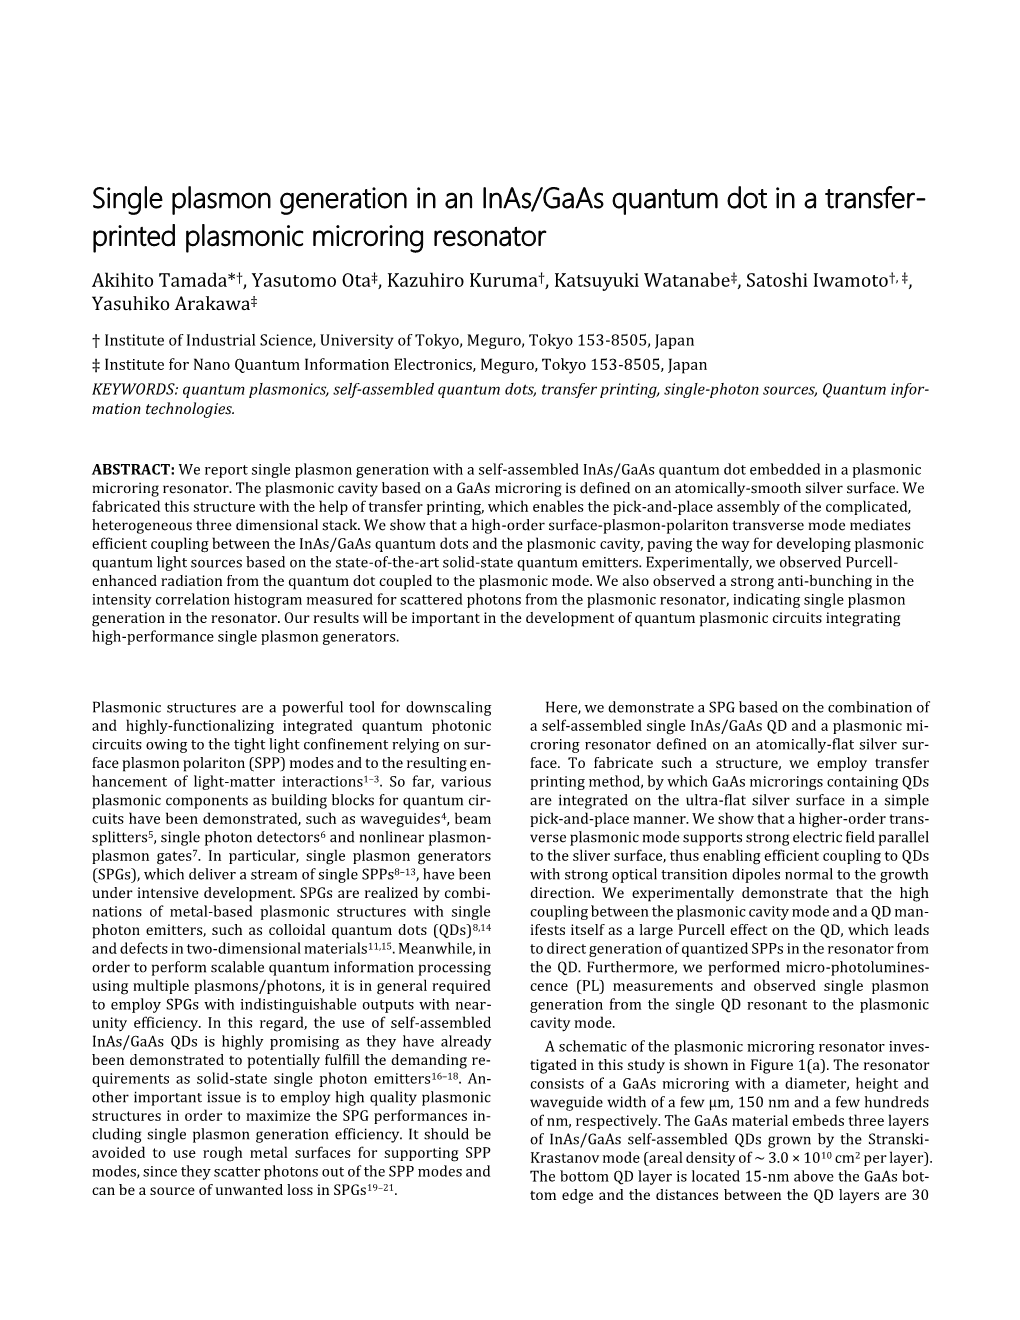 Single Plasmon Generation in an Inas/Gaas Quantum Dot in a Transfer